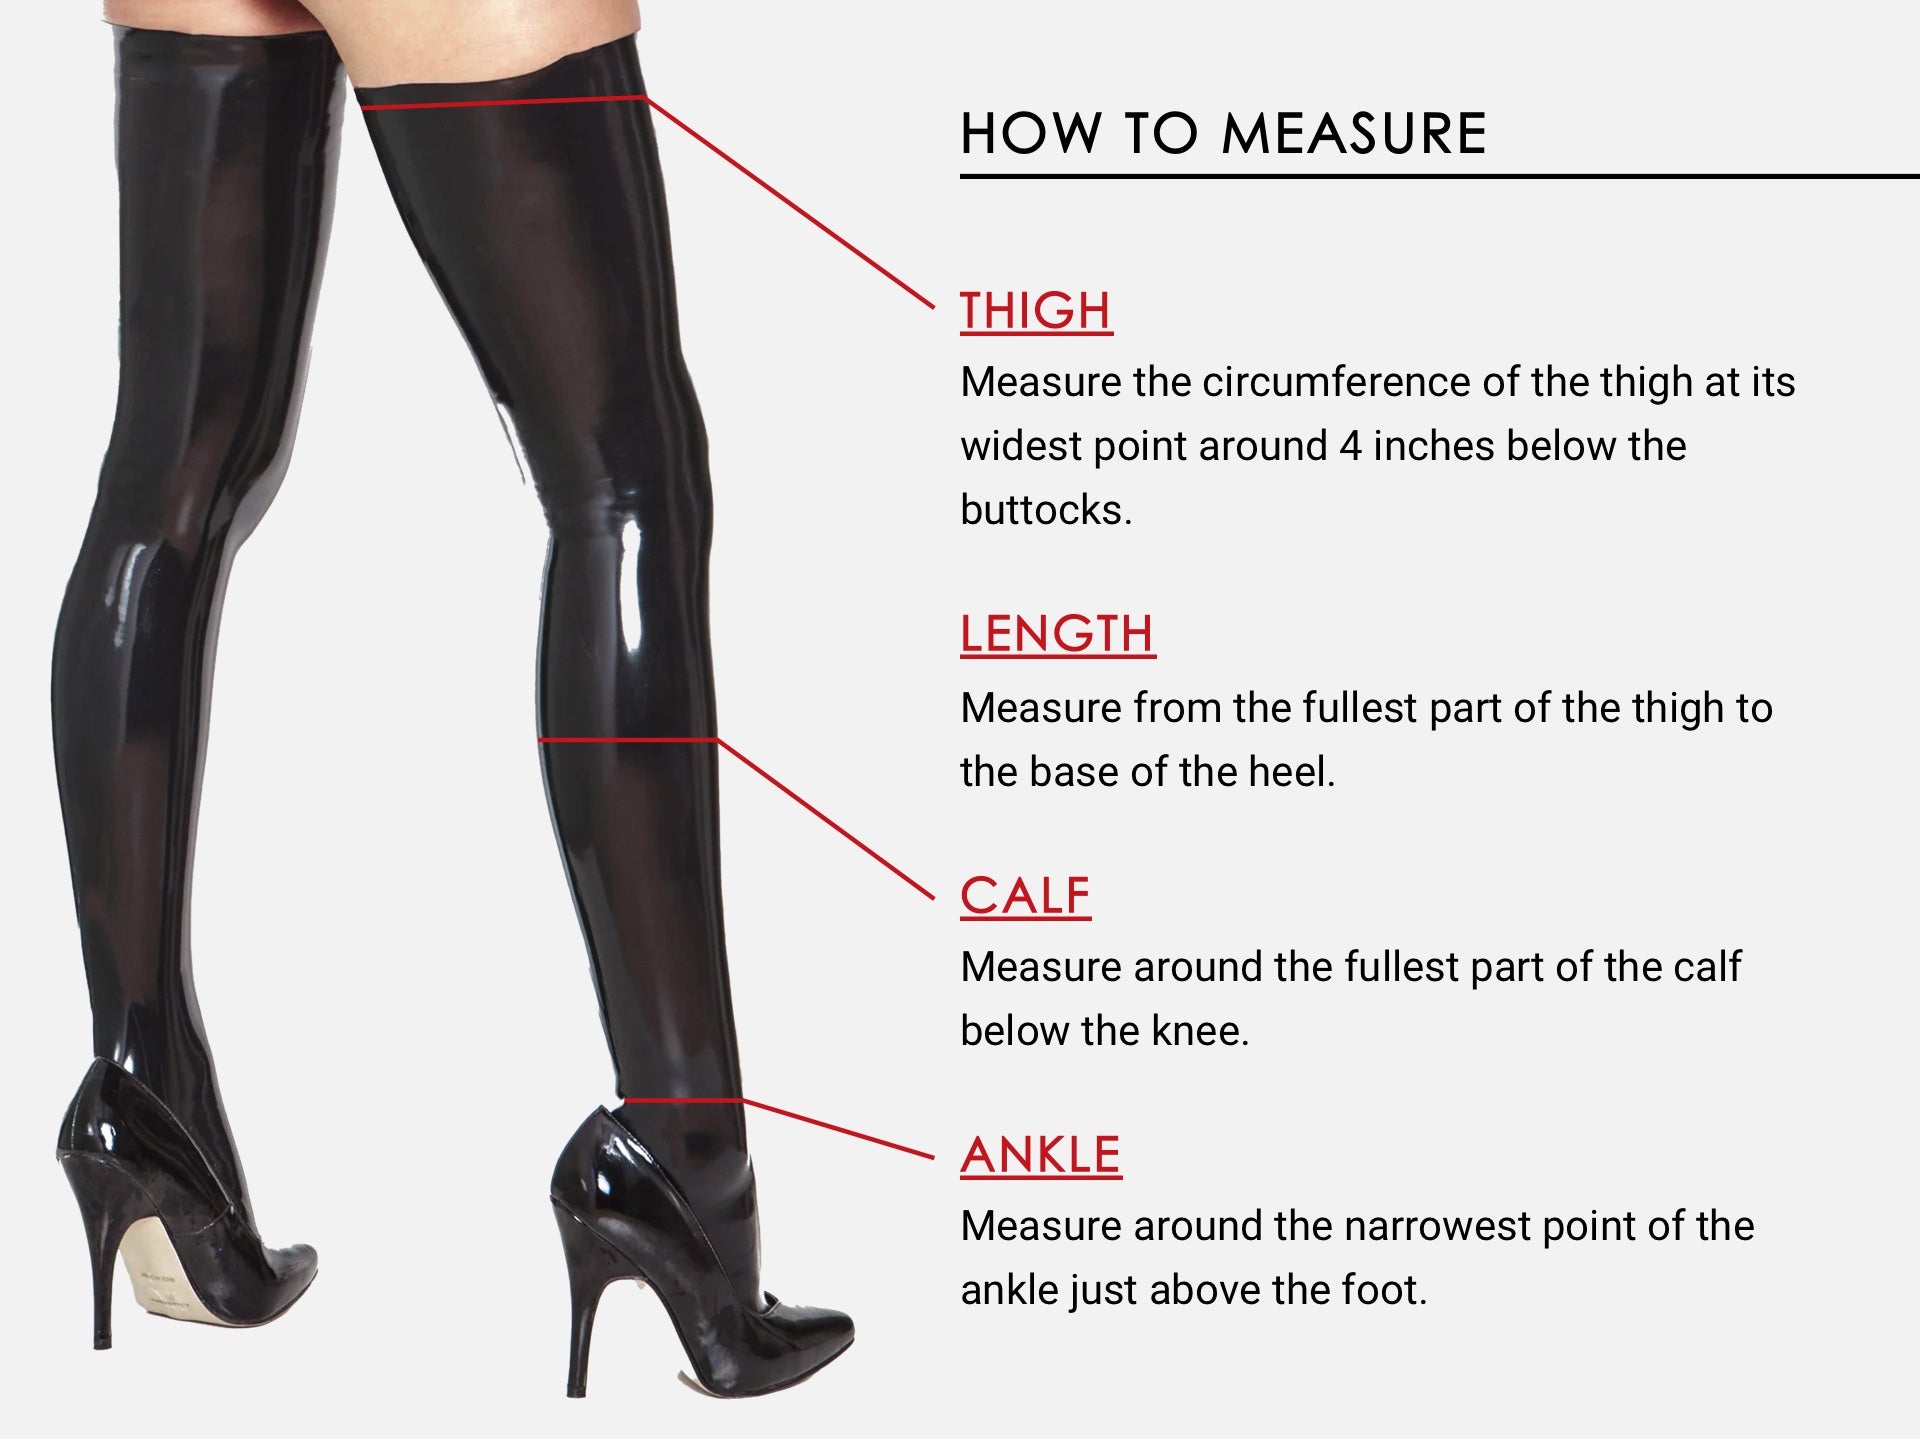 How to measure stockings